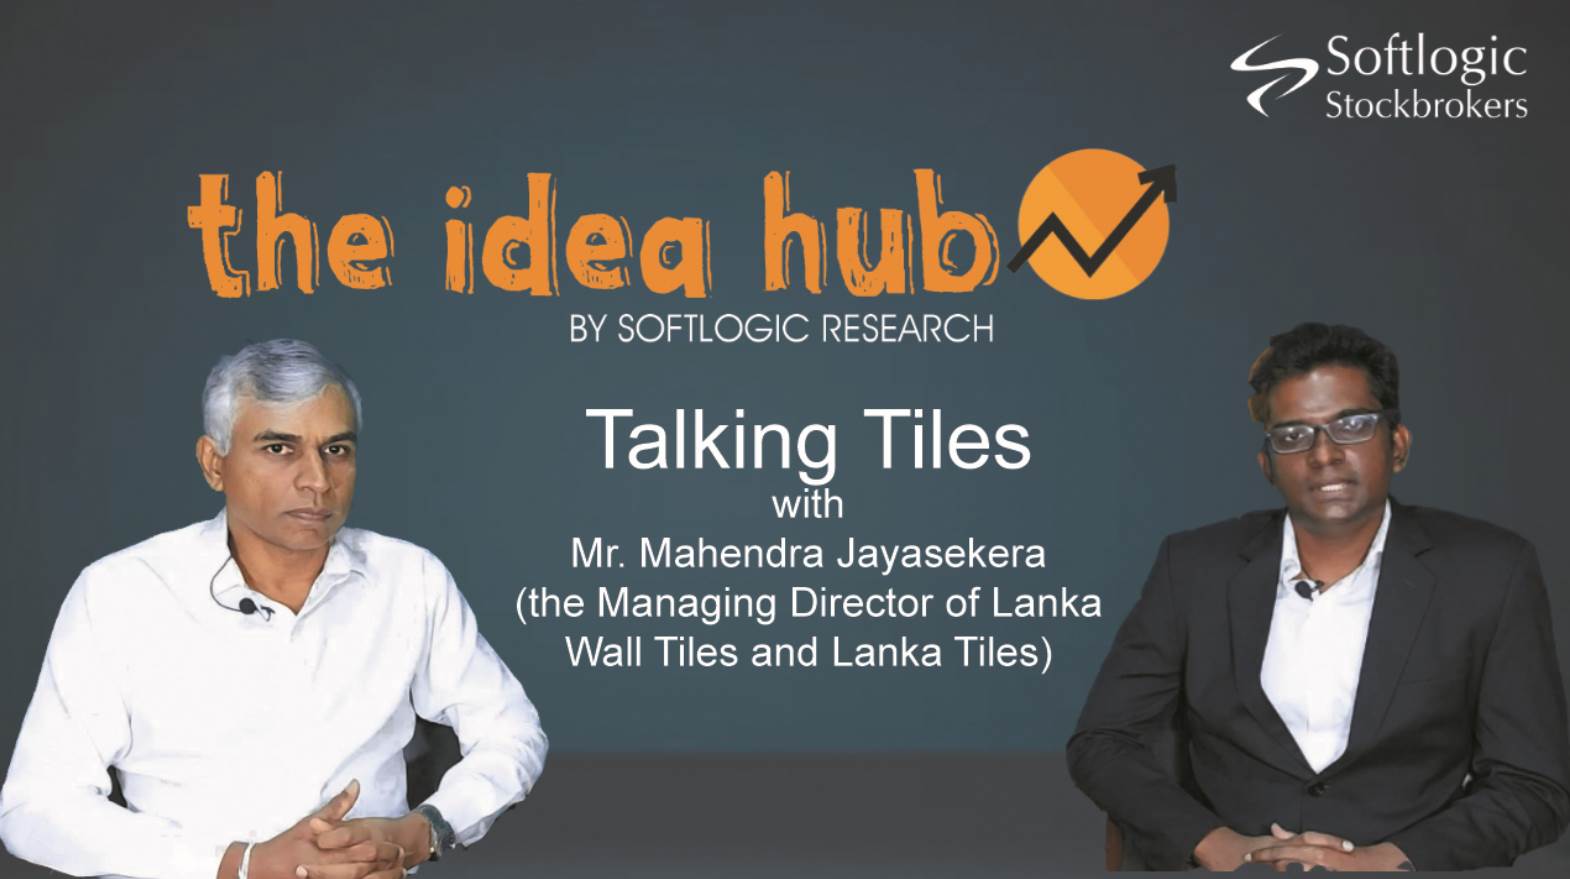 VIDEO: Discussion with Mahendra Jayasekera, MD of Lanka Tiles & Lanka Walltiles